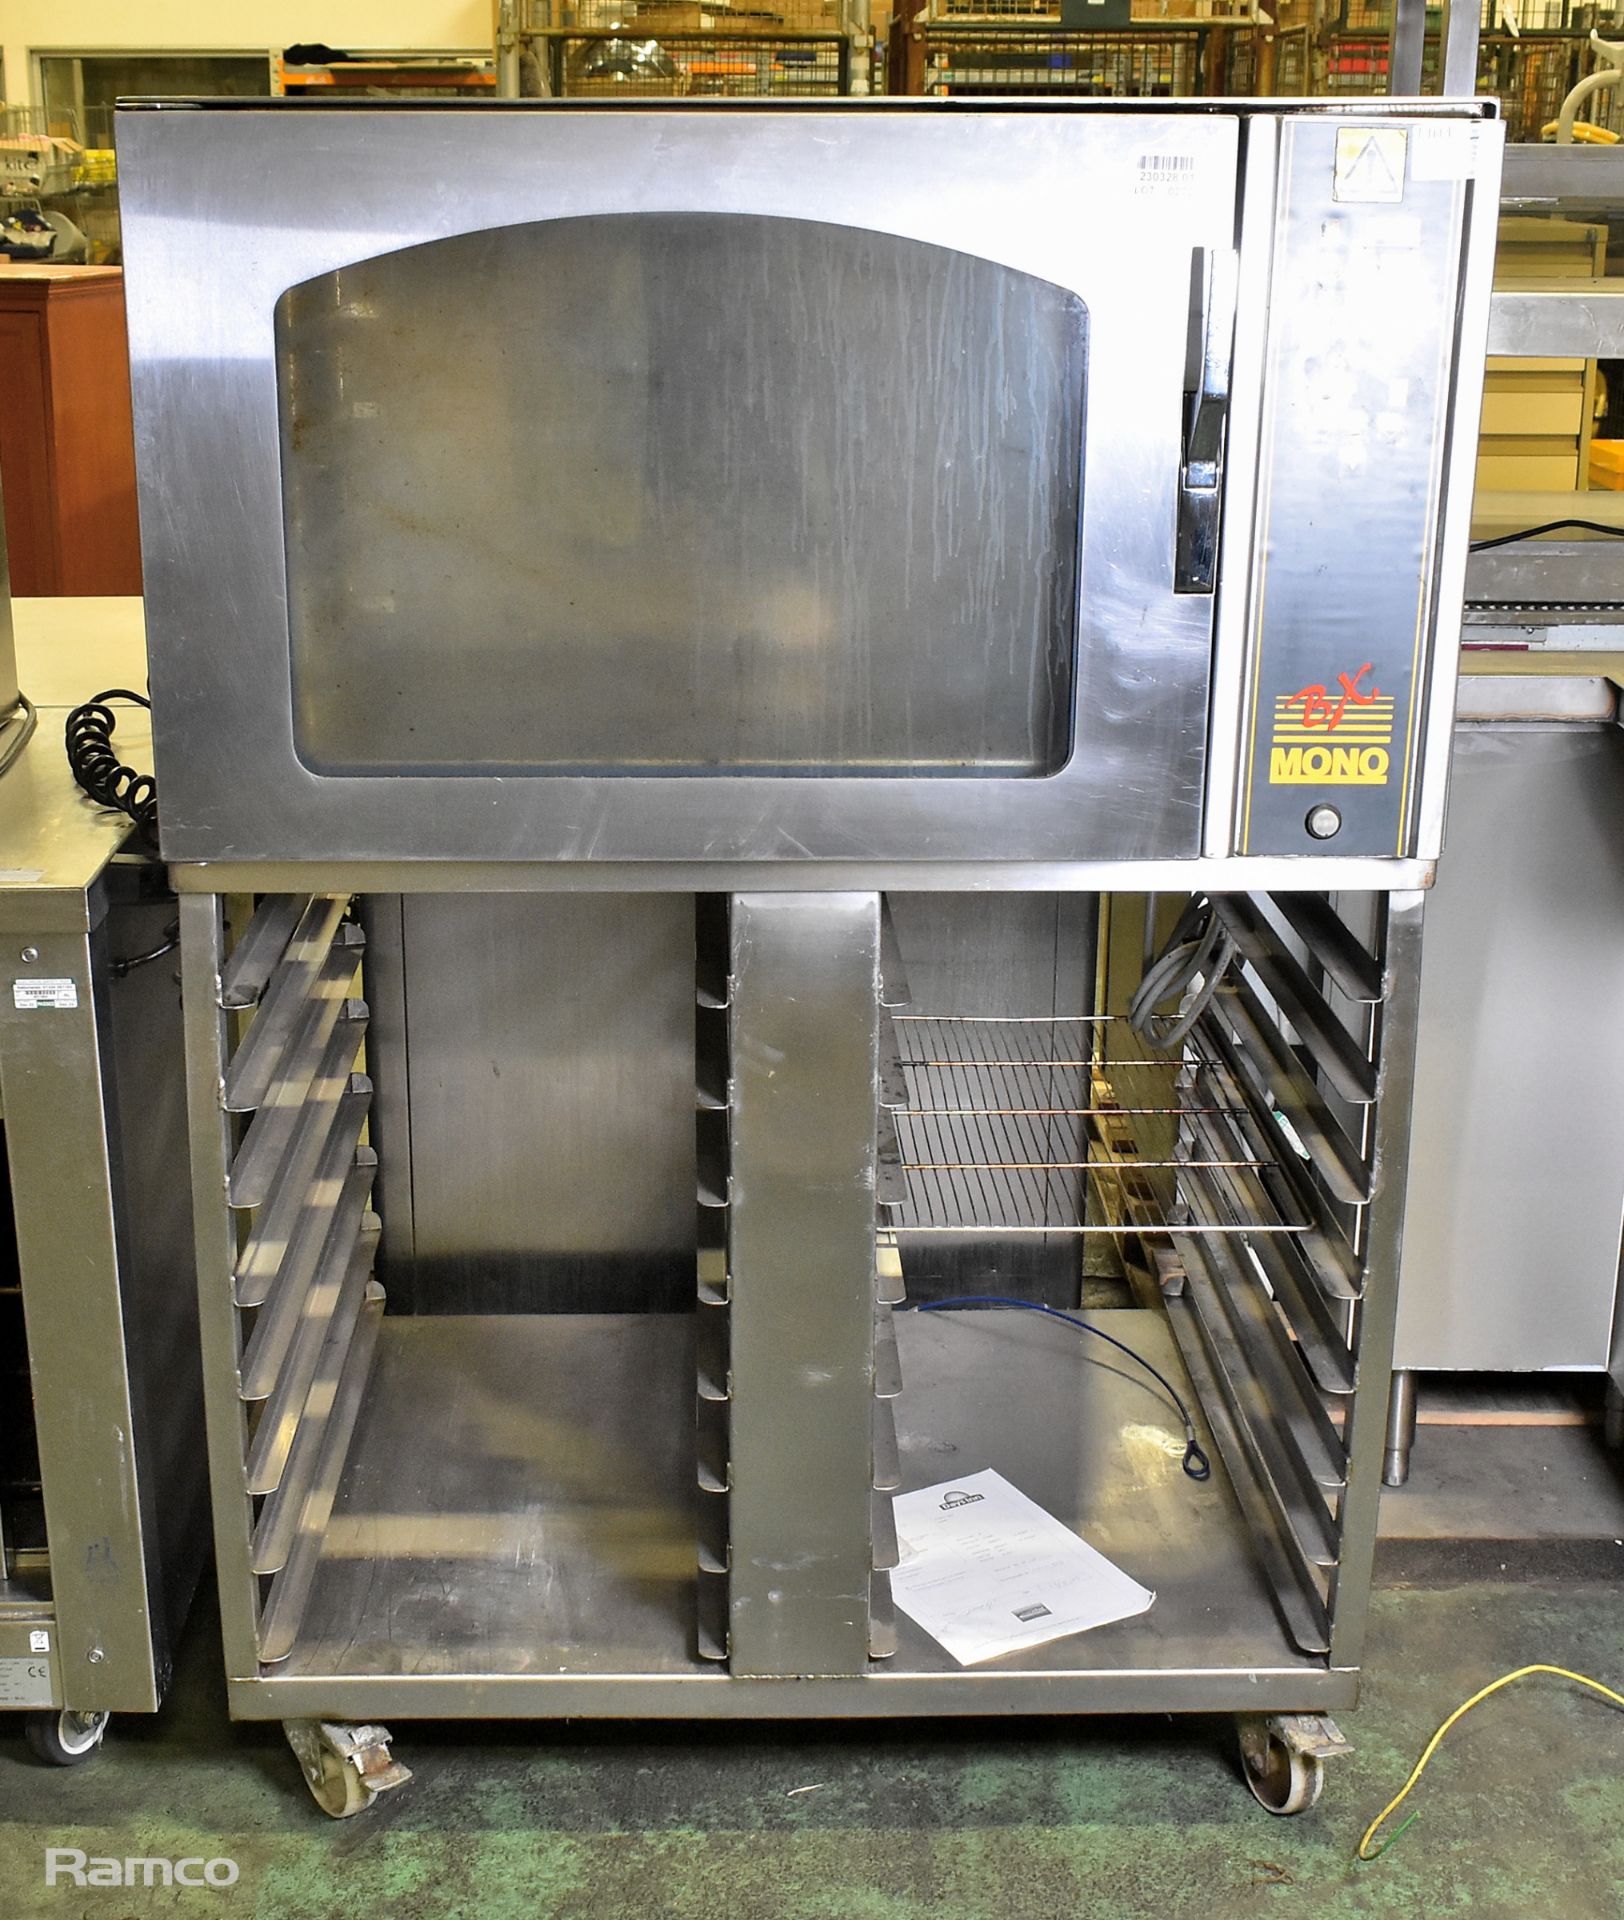 Mono BX equipment FG 15B Oven with stand, 415V 50Hz - Serial No 010460360 - L100 x W87 x H150cm